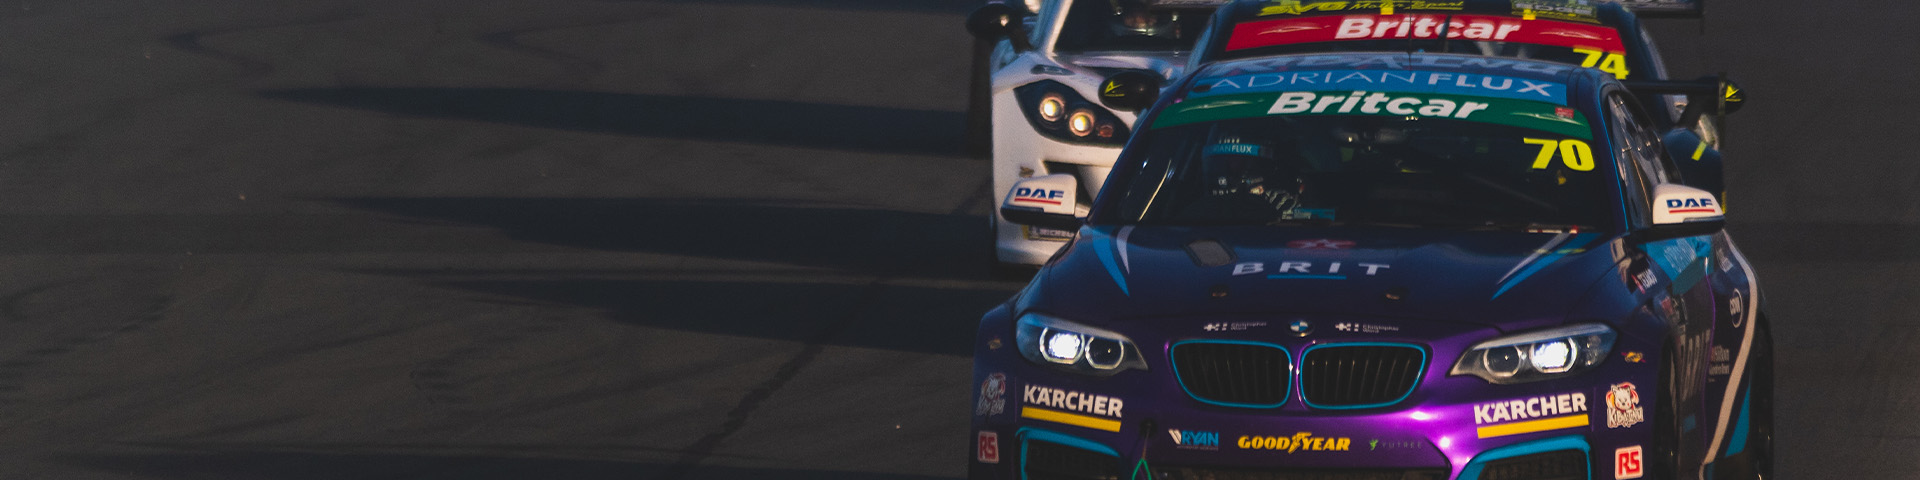 Image shows racing cars on circuit